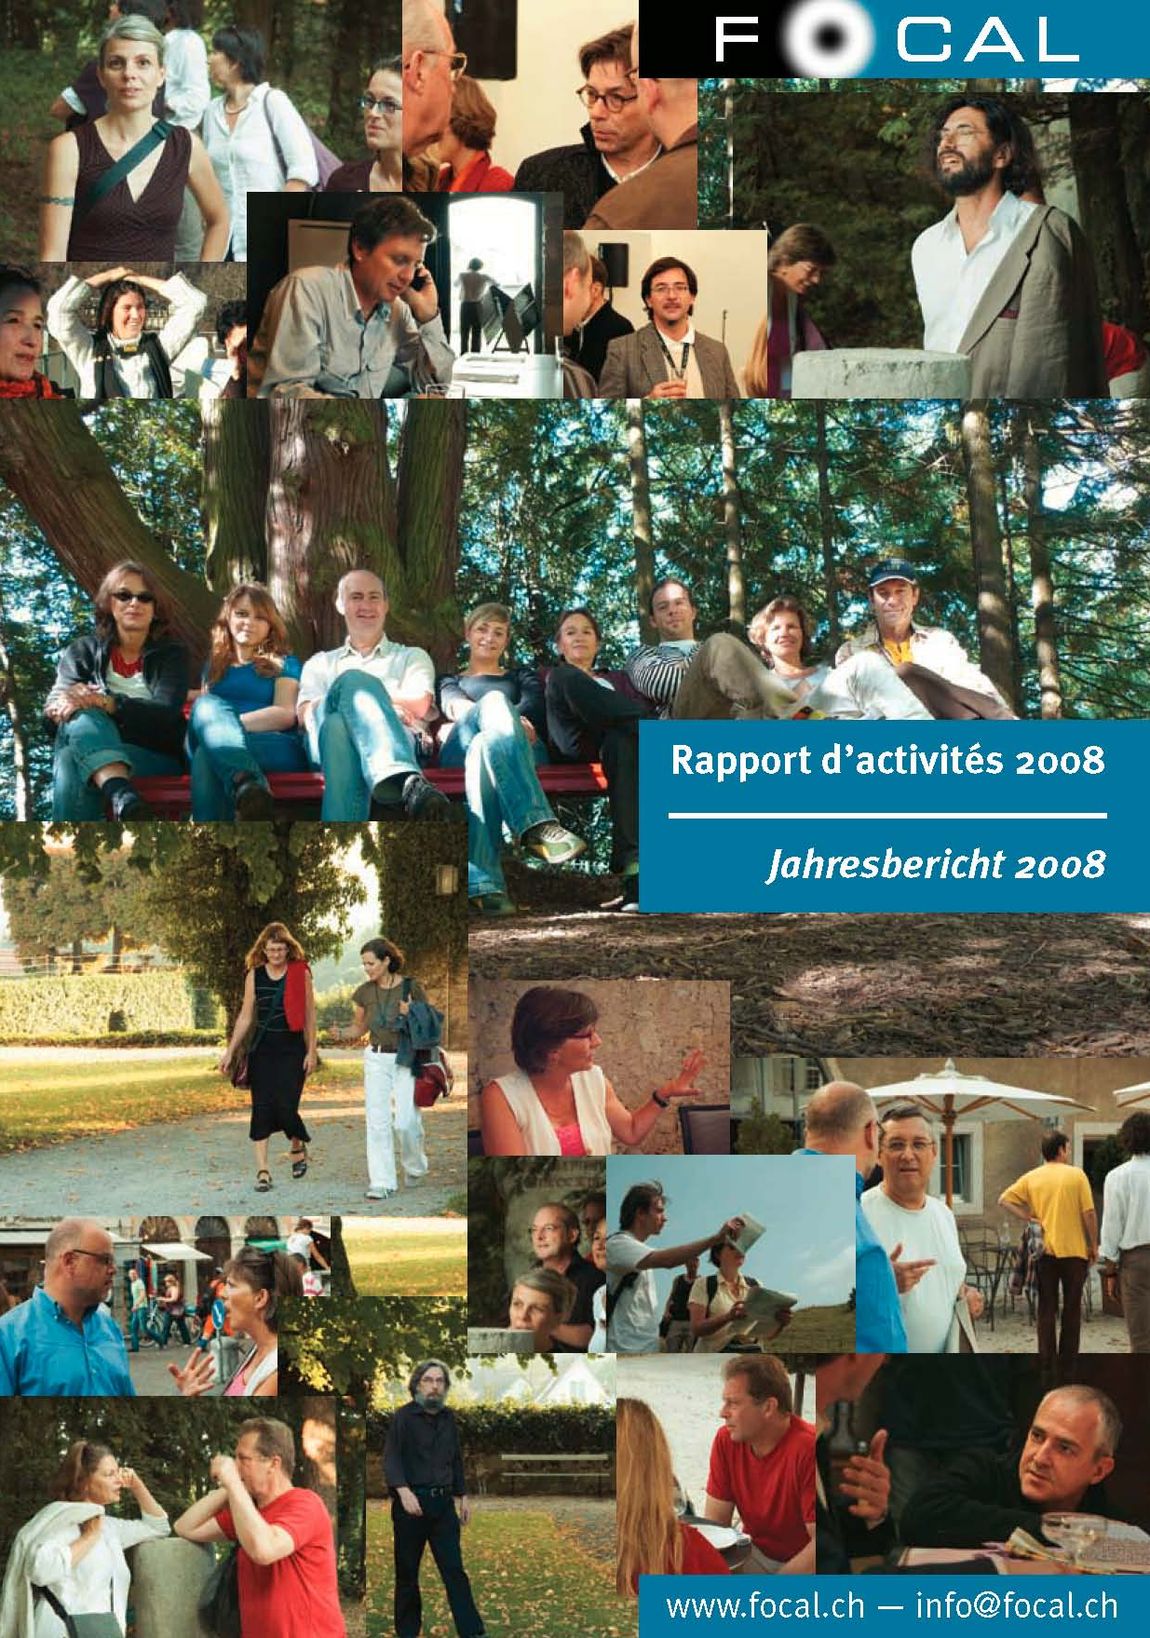 FOCAL - Rapport d’activités / Jahresbericht 2008